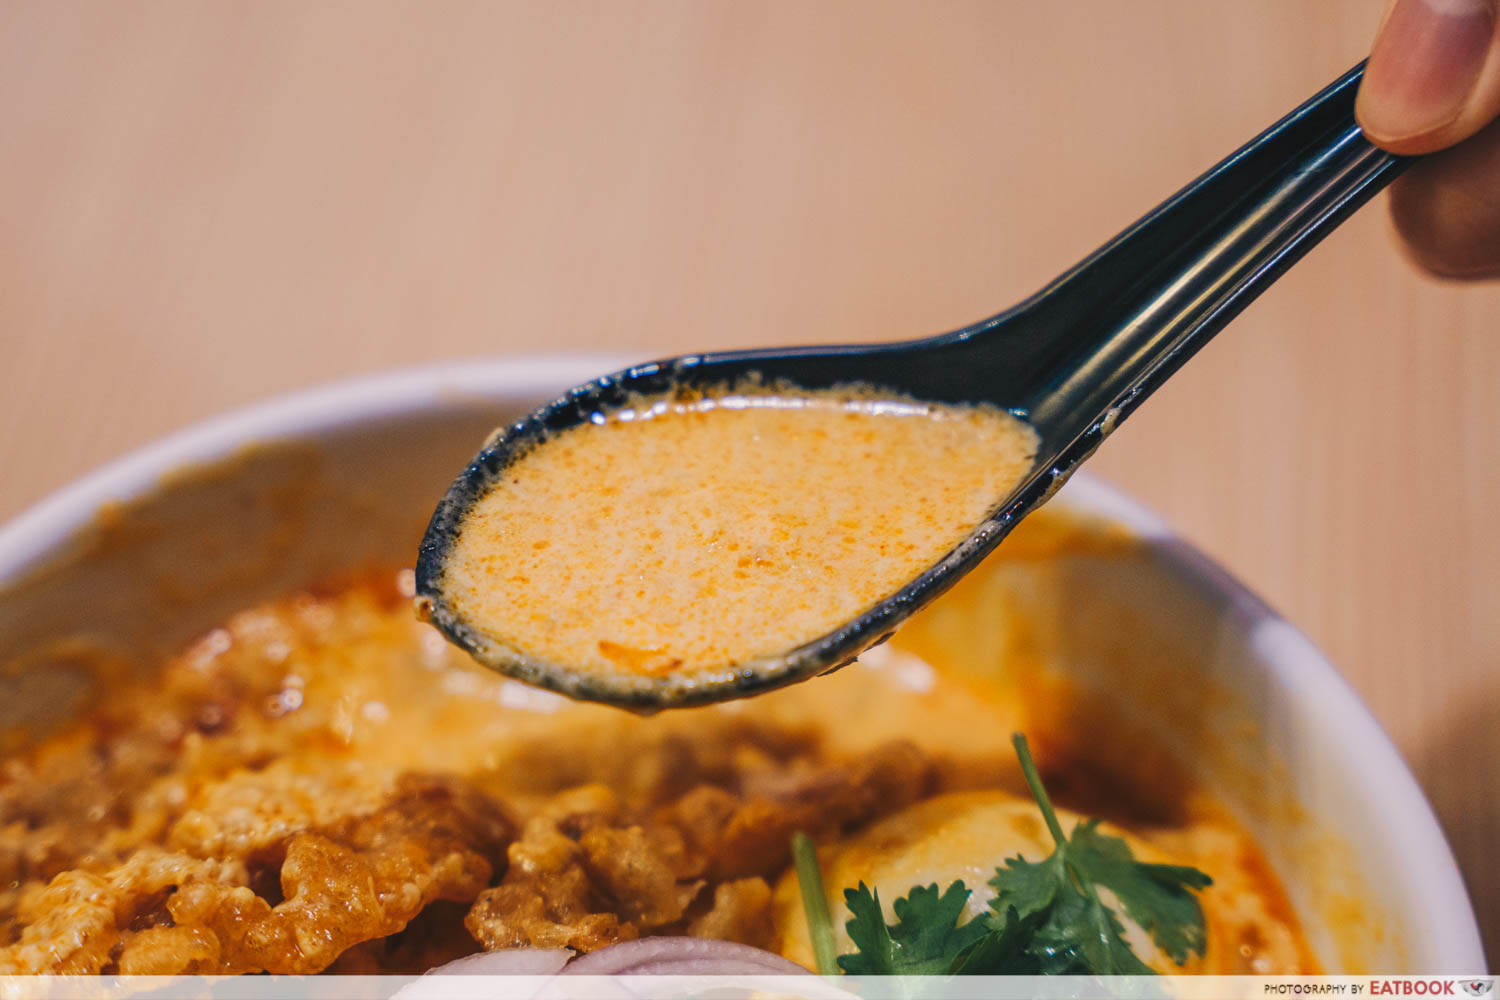 Inle Myanmar Restaurant - Spoonful of curry gravy